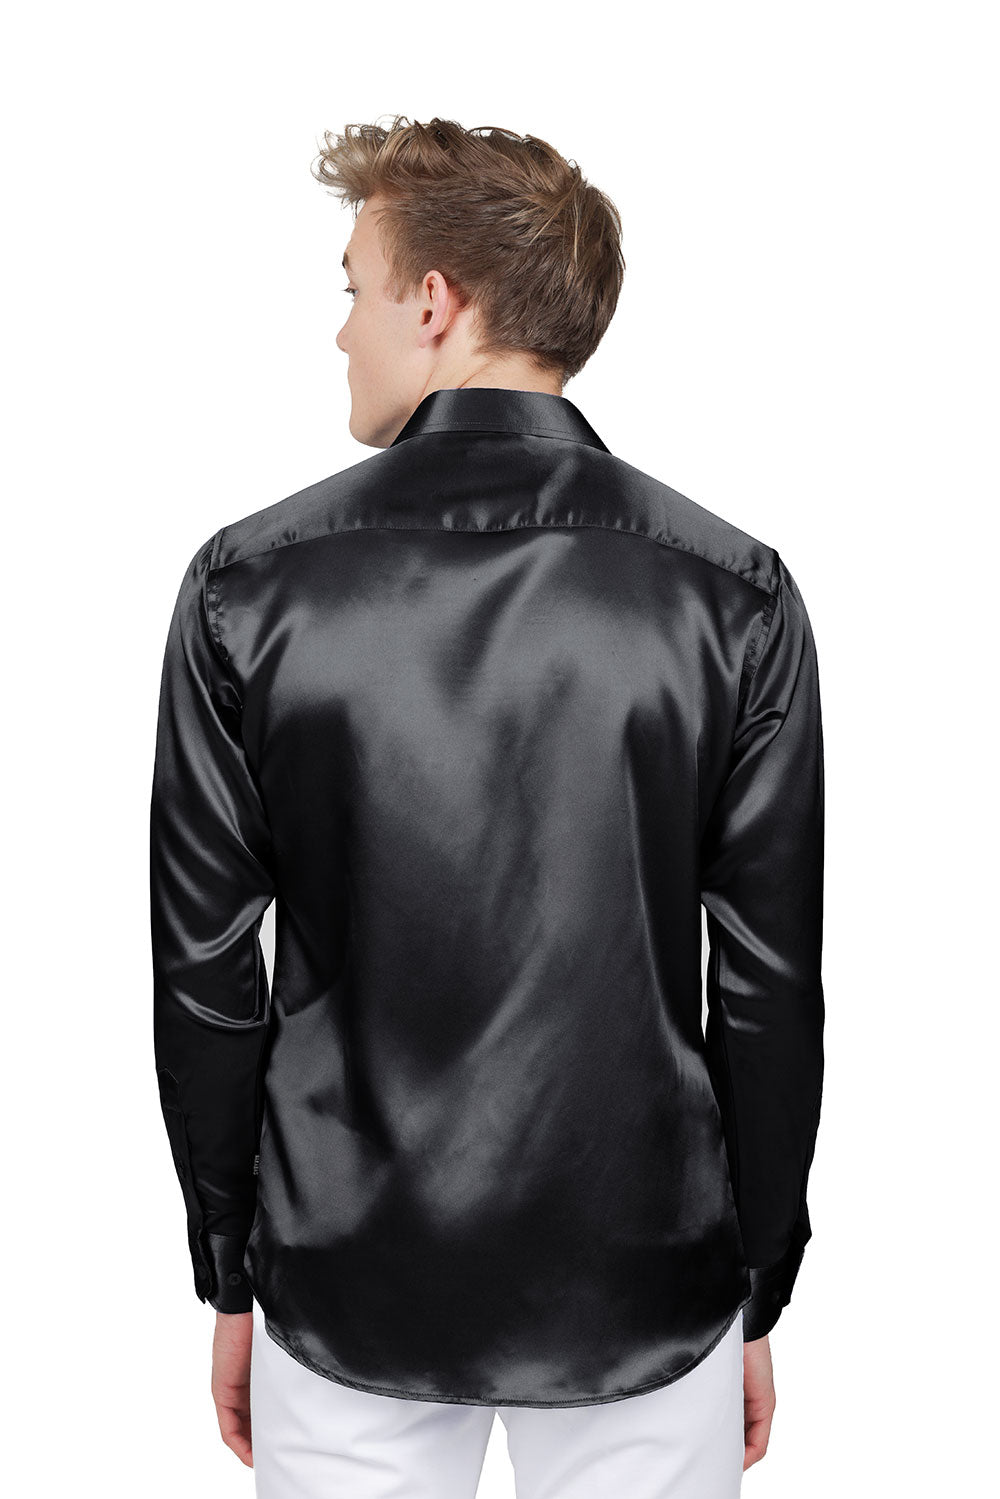 BARABAS Mens Luxury Metallic Long Sleeve Button Down Shiny shirts B312 Black